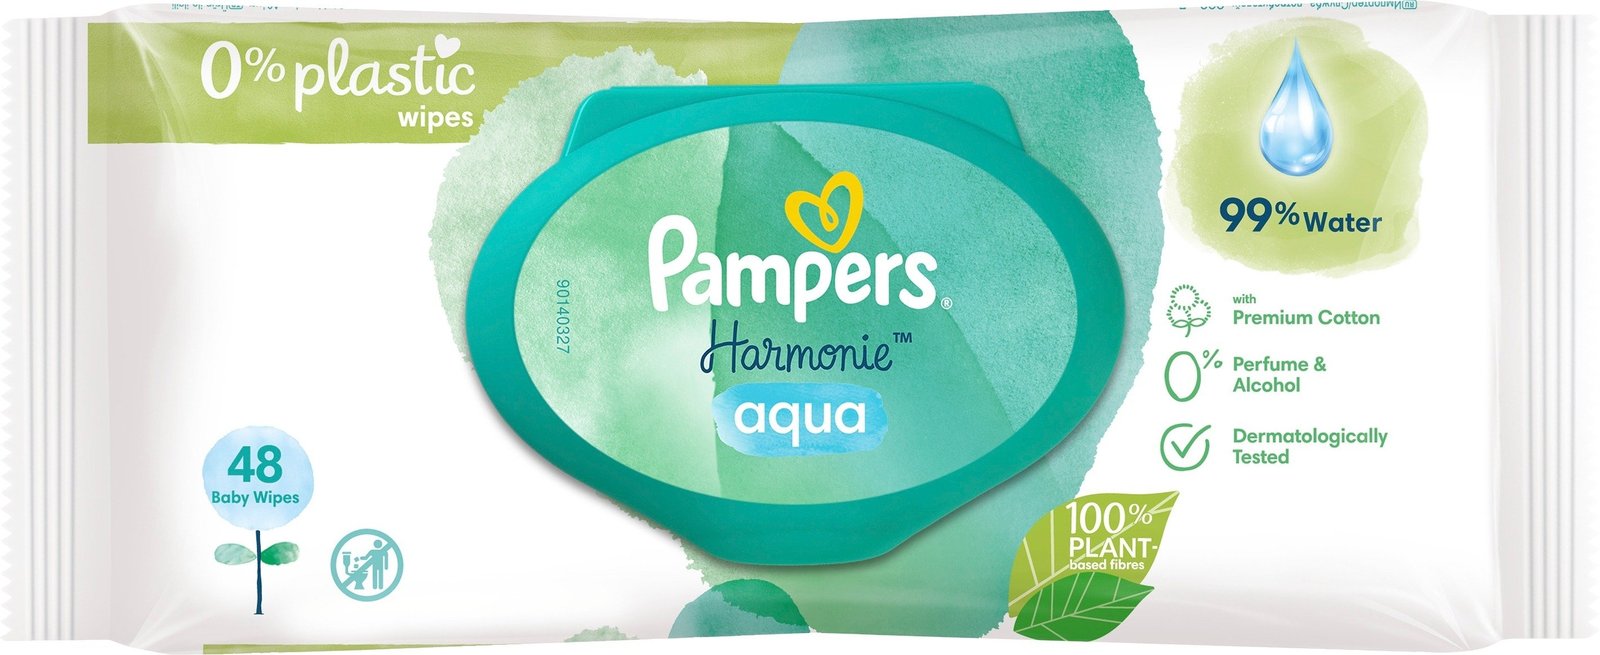 Pampers Harmonie Aqua Wipes 48 st